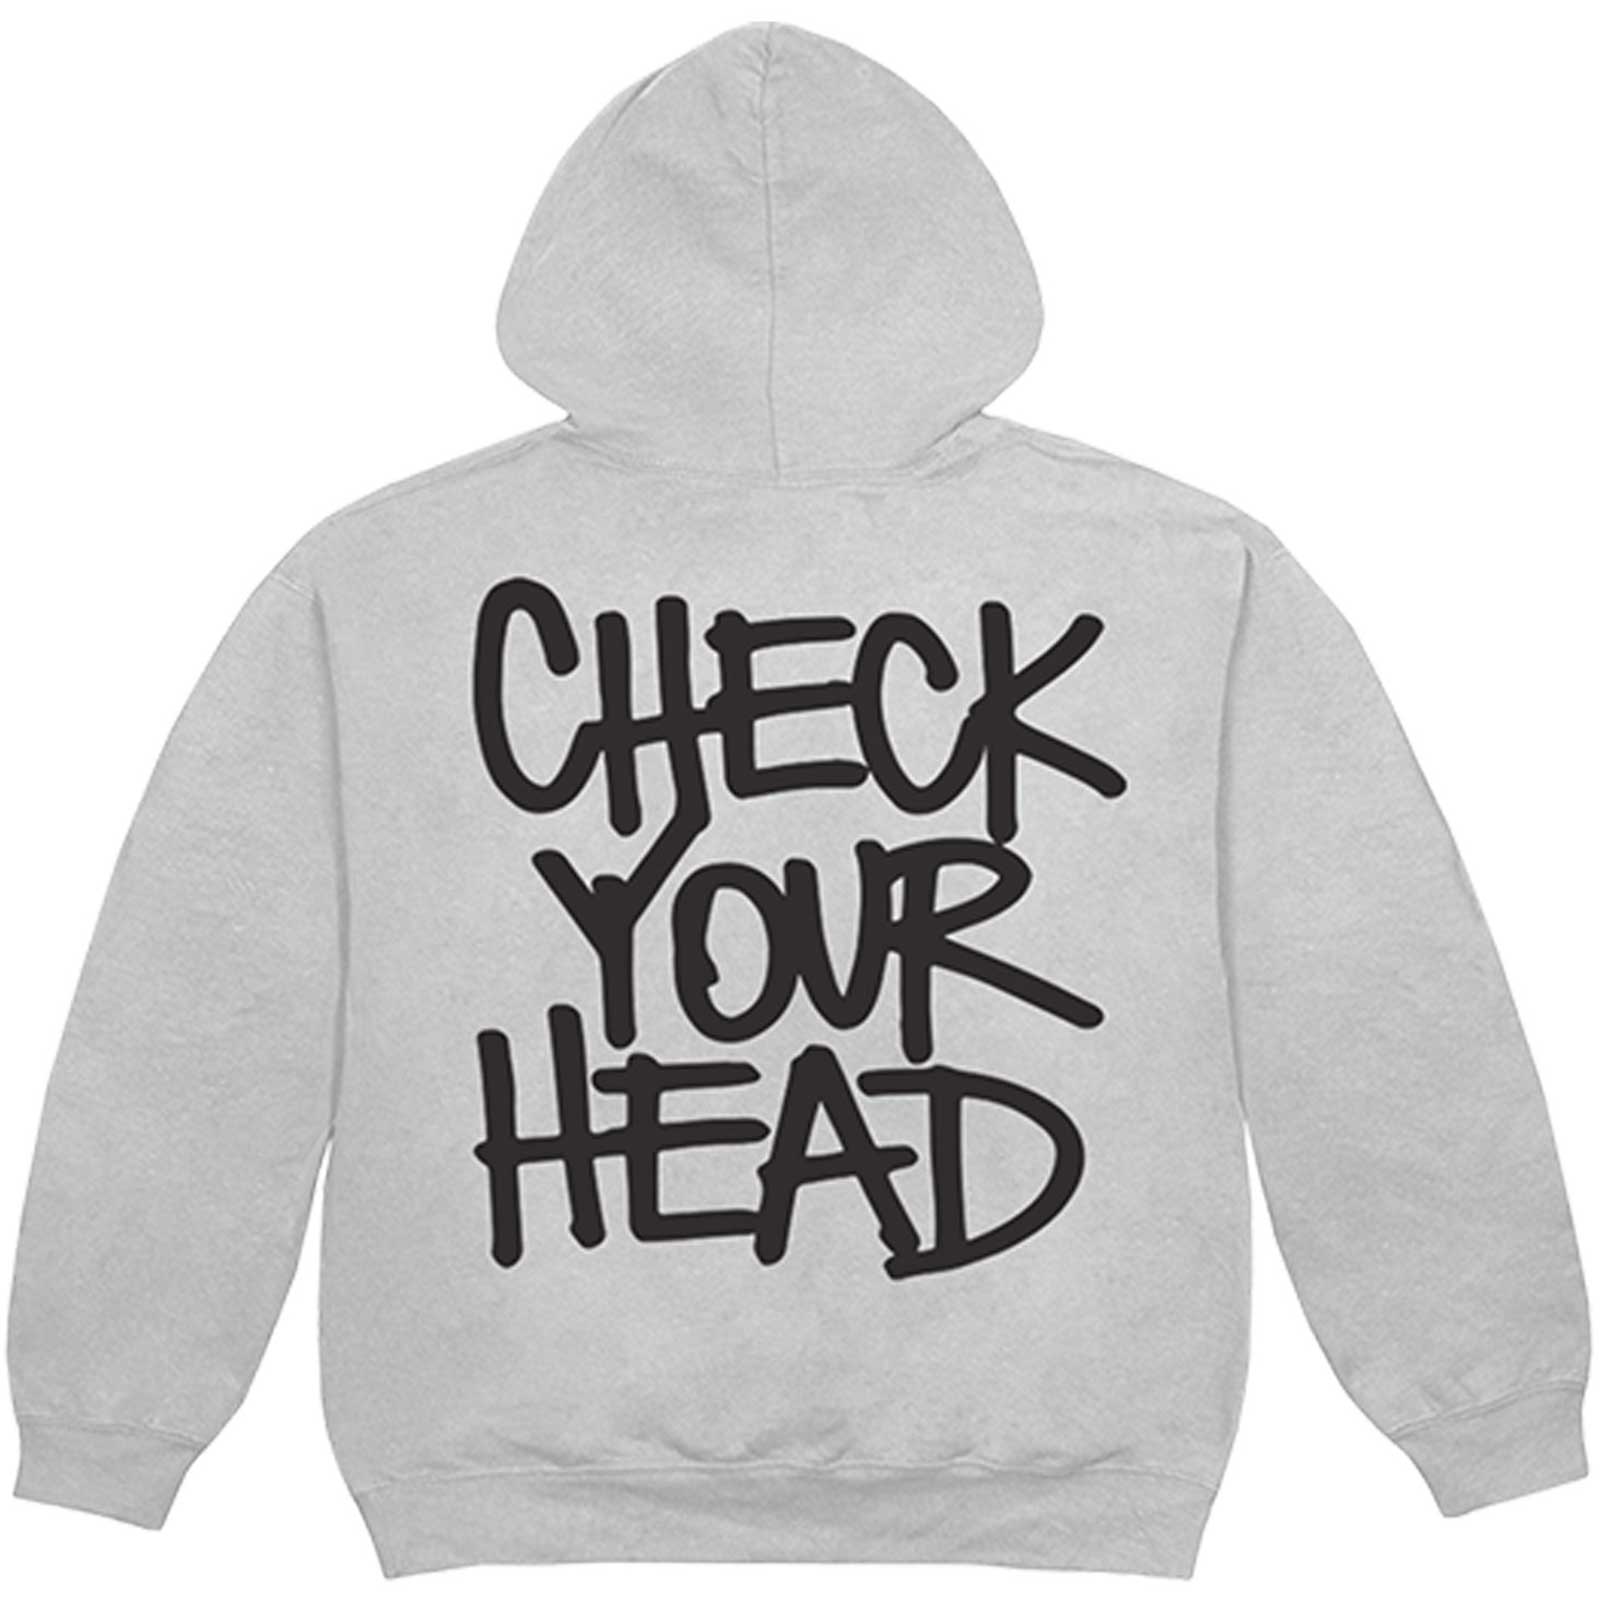 The Beastie Boys Unisex-Hoodie – Check Your Head – Grau, offizielles Lizenzdesign